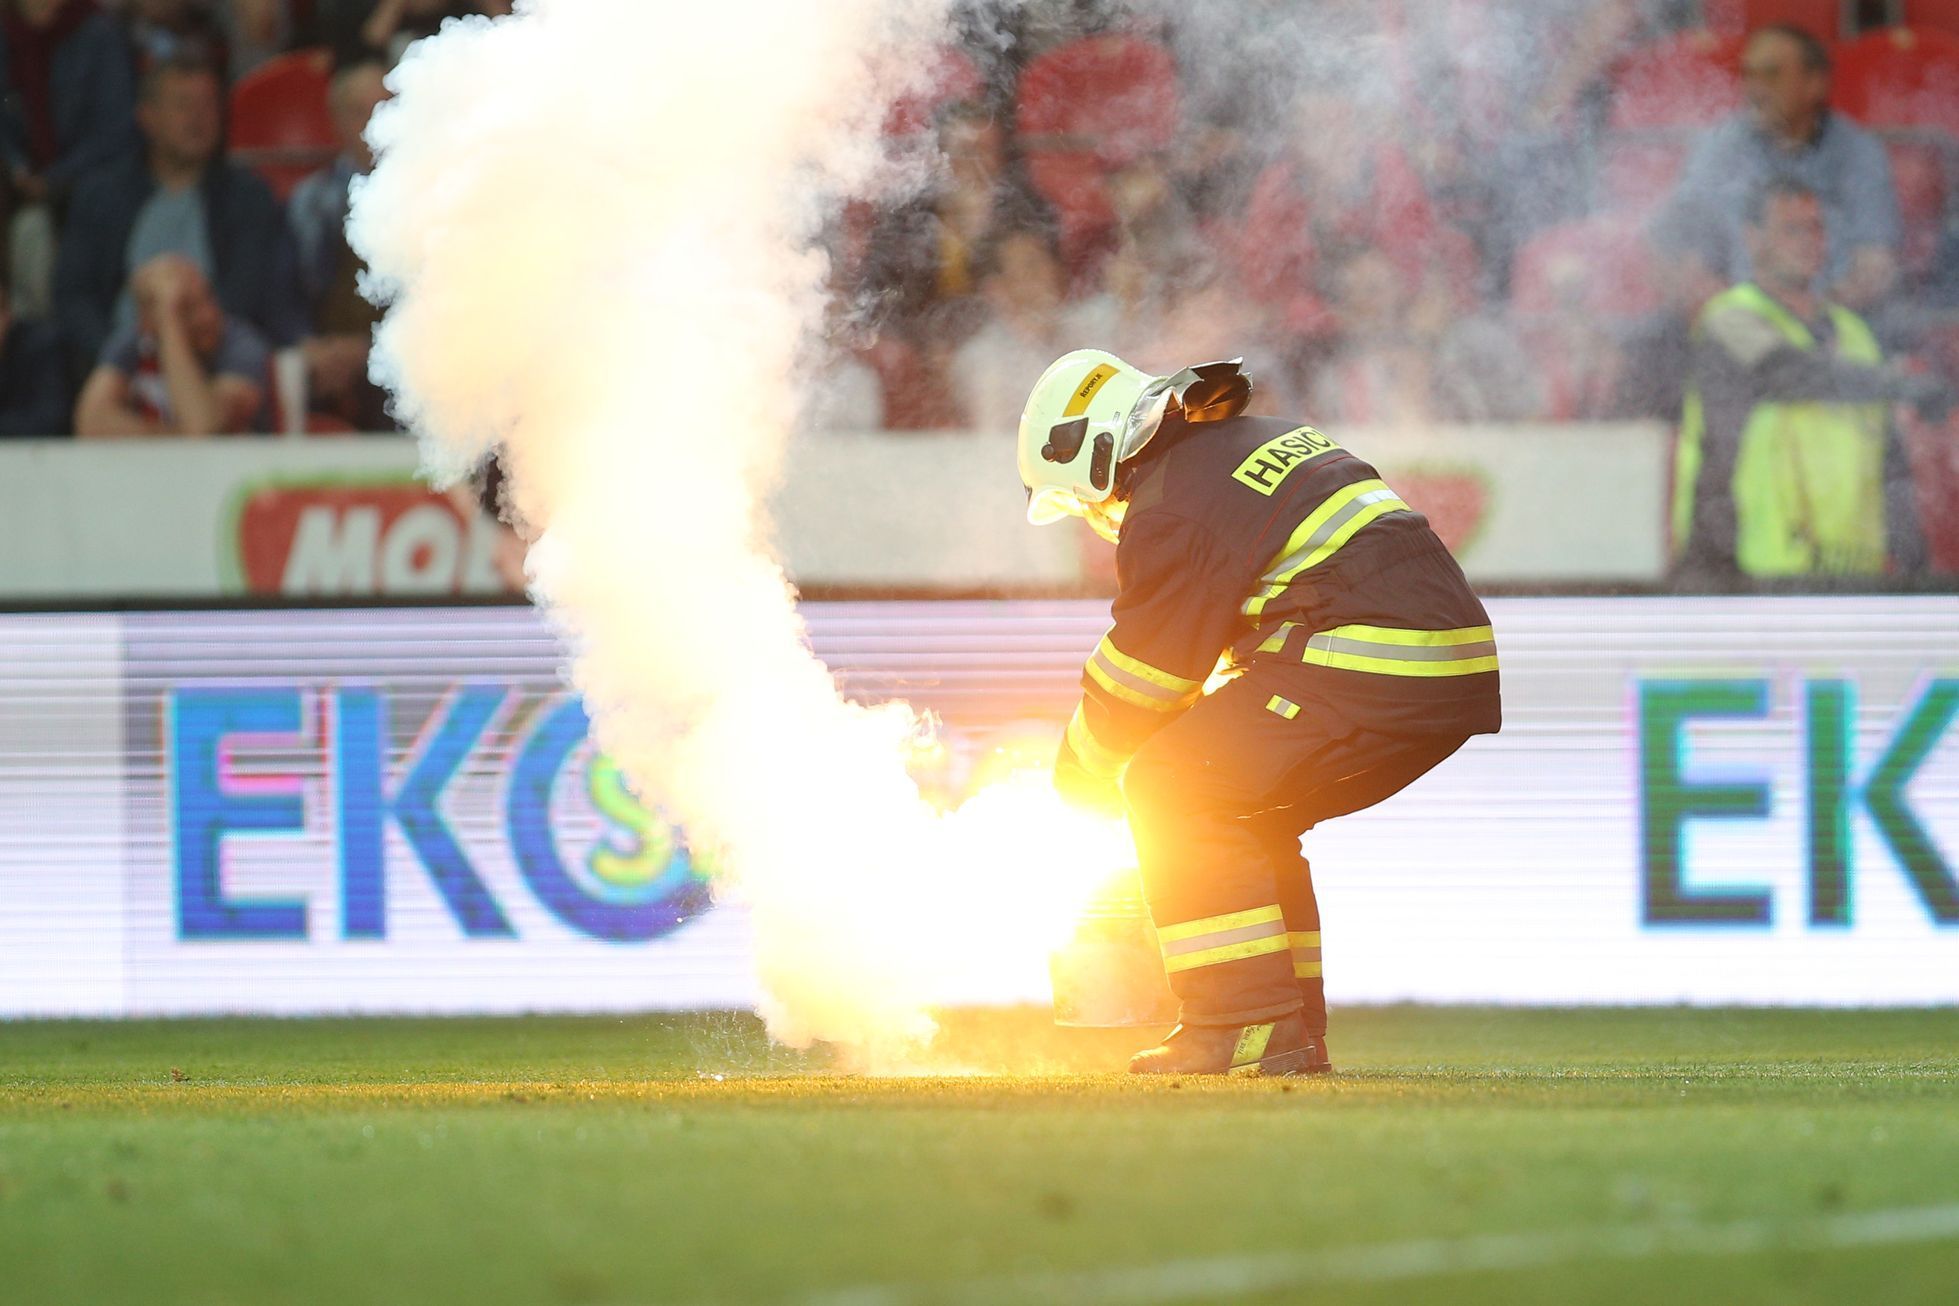 Semifinále MOL Cupu 2018/19, Slavia - Sparta: Zásah hasiče proti světlici